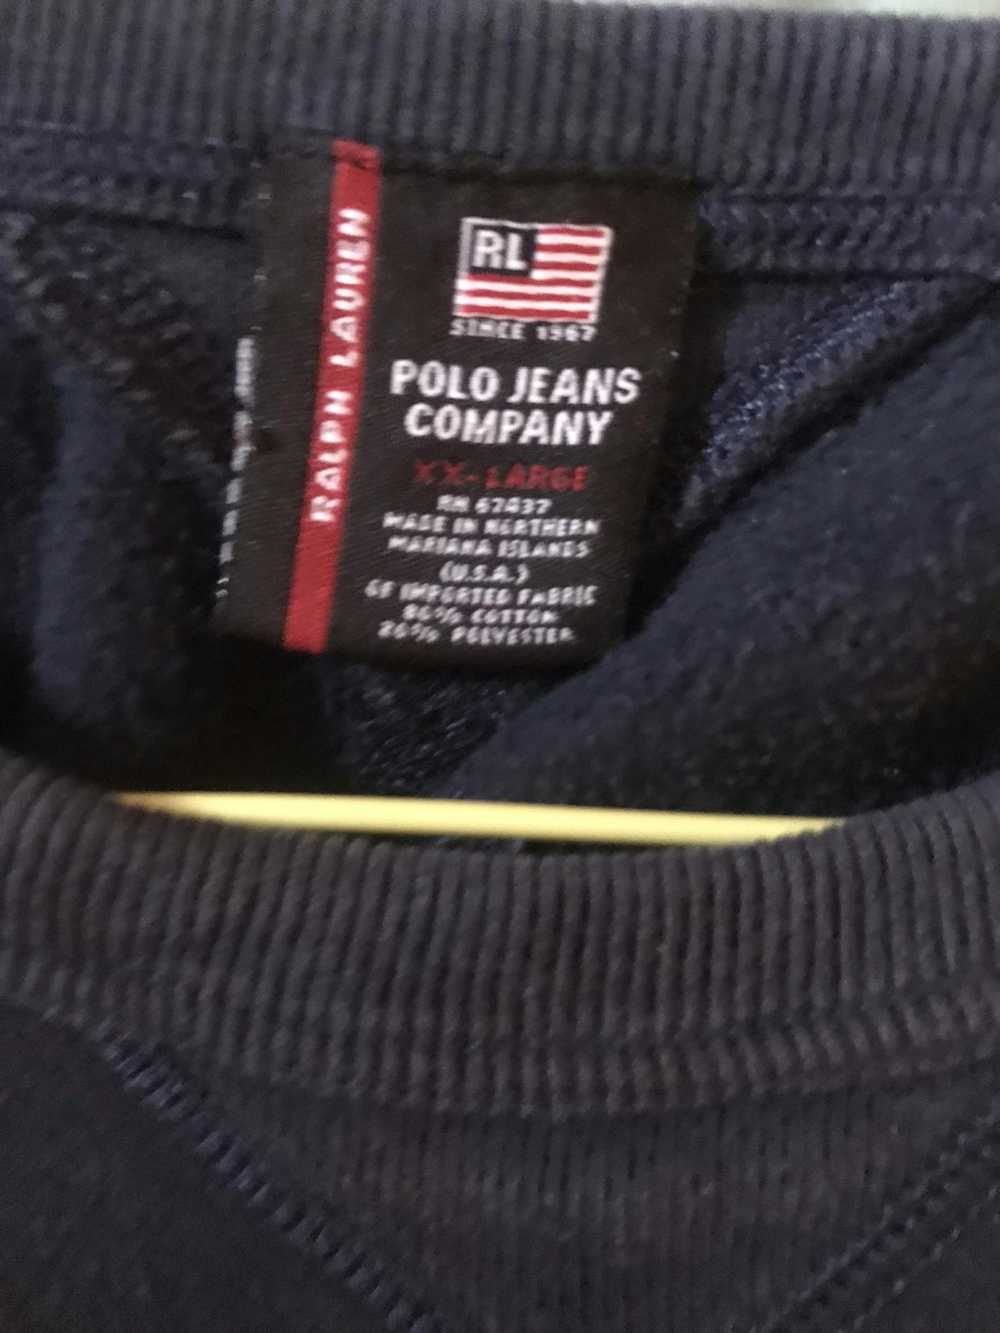 Polo Ralph Lauren Polo Jeans Crewneck - image 4